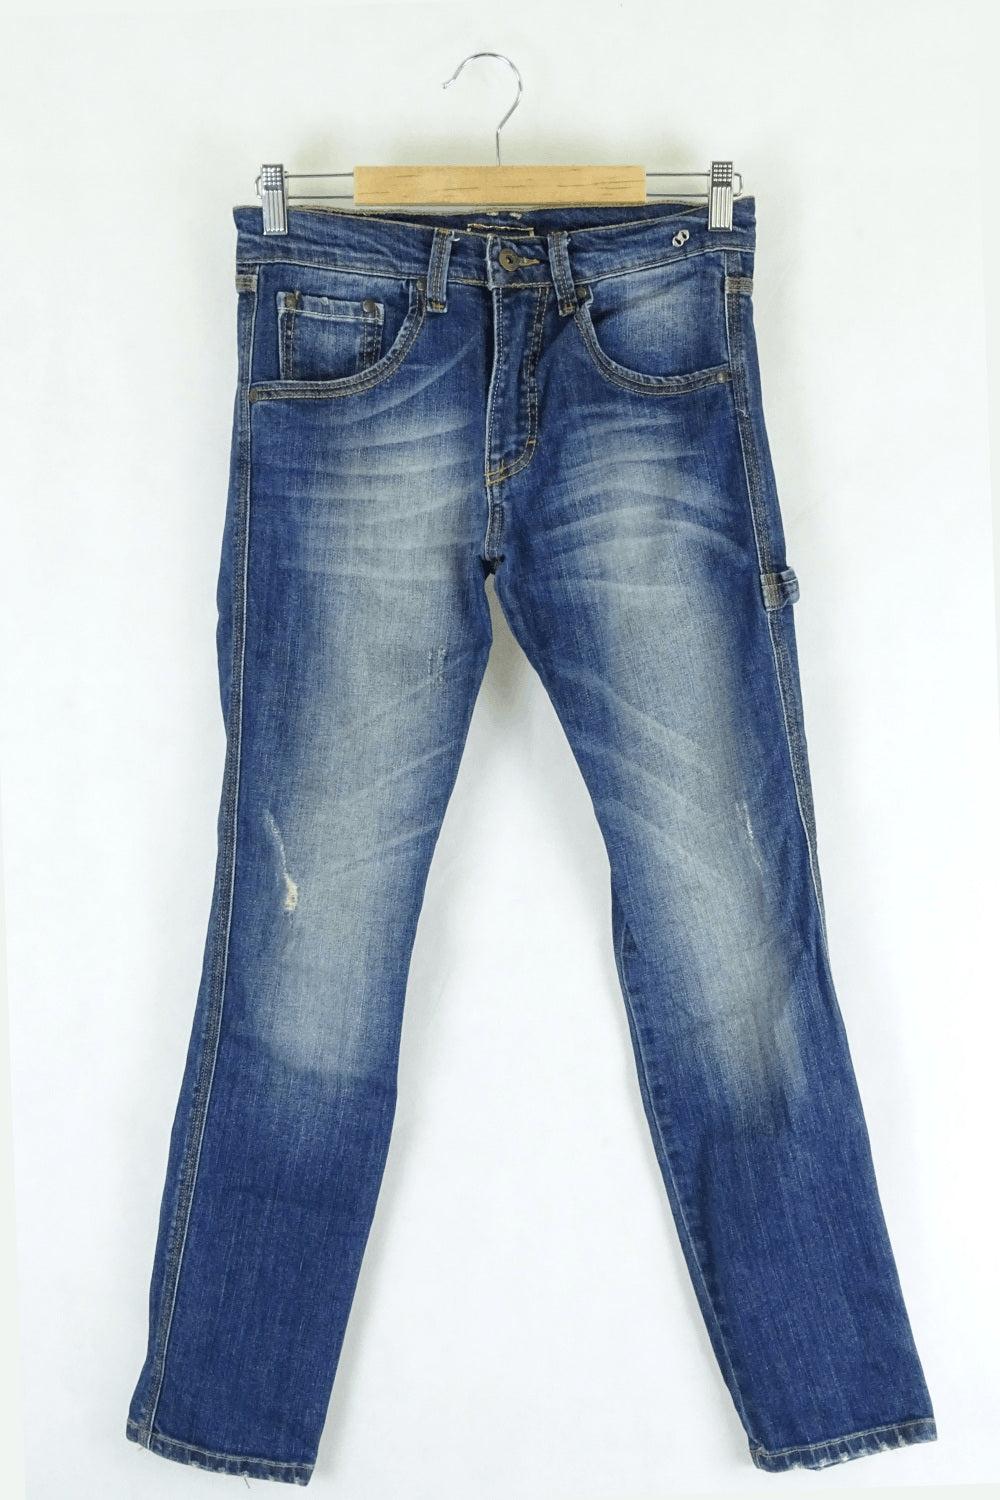 Ottod'Ame Distressed Denim Jeans 8